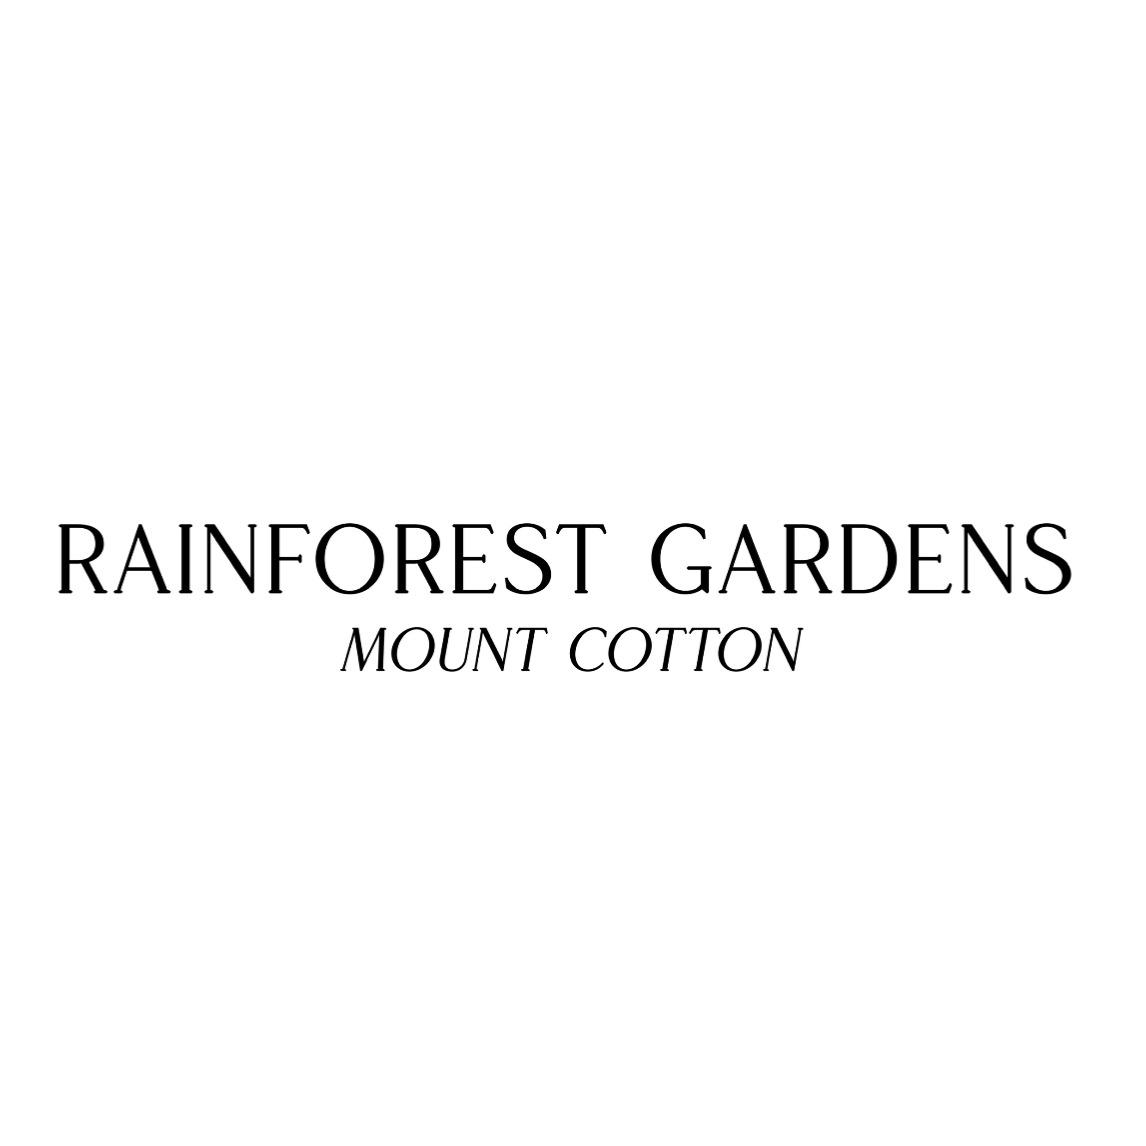 Rainforest Gardens Logo